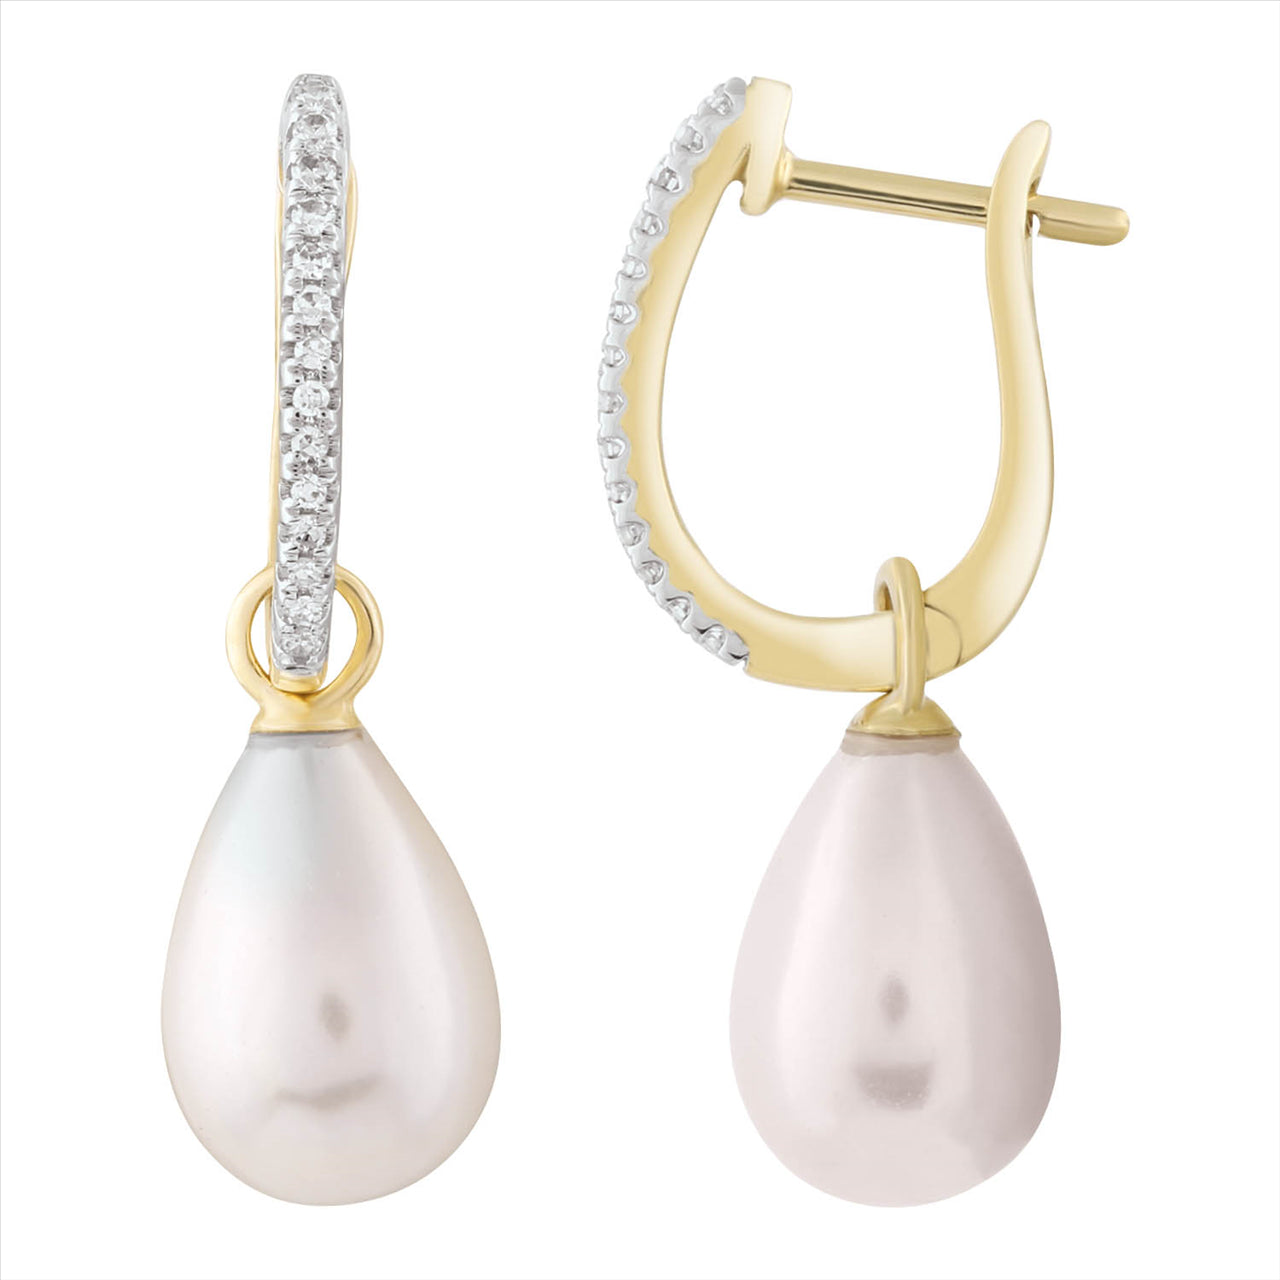 9k Yellow Gold Diamond and Pearl Drop Earrings